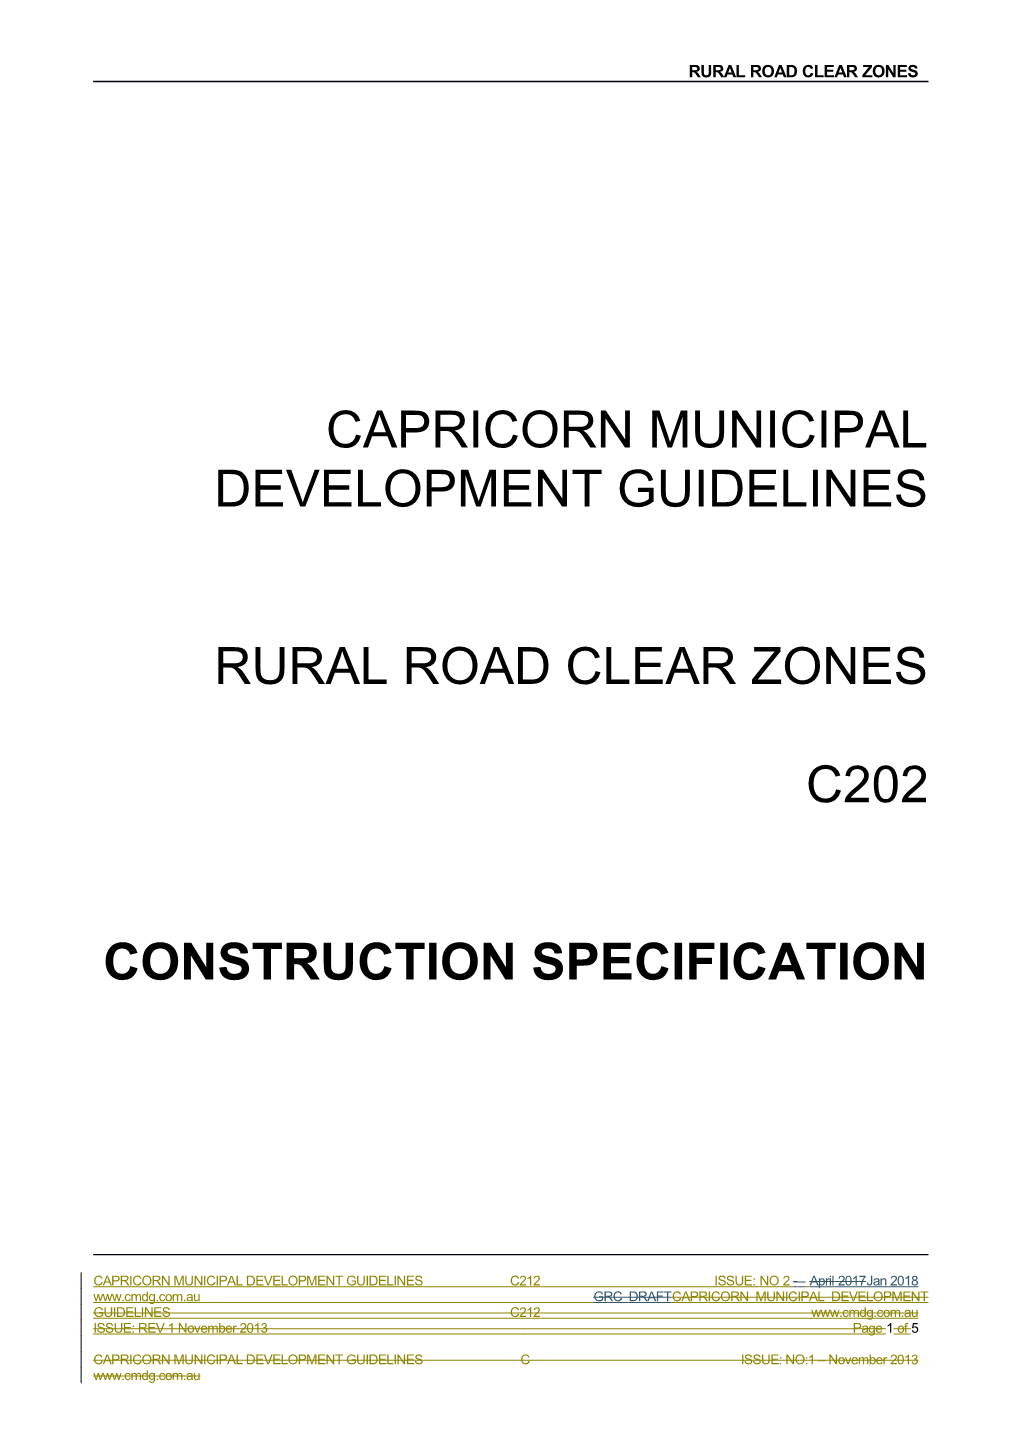 Rural Road Clear Zones